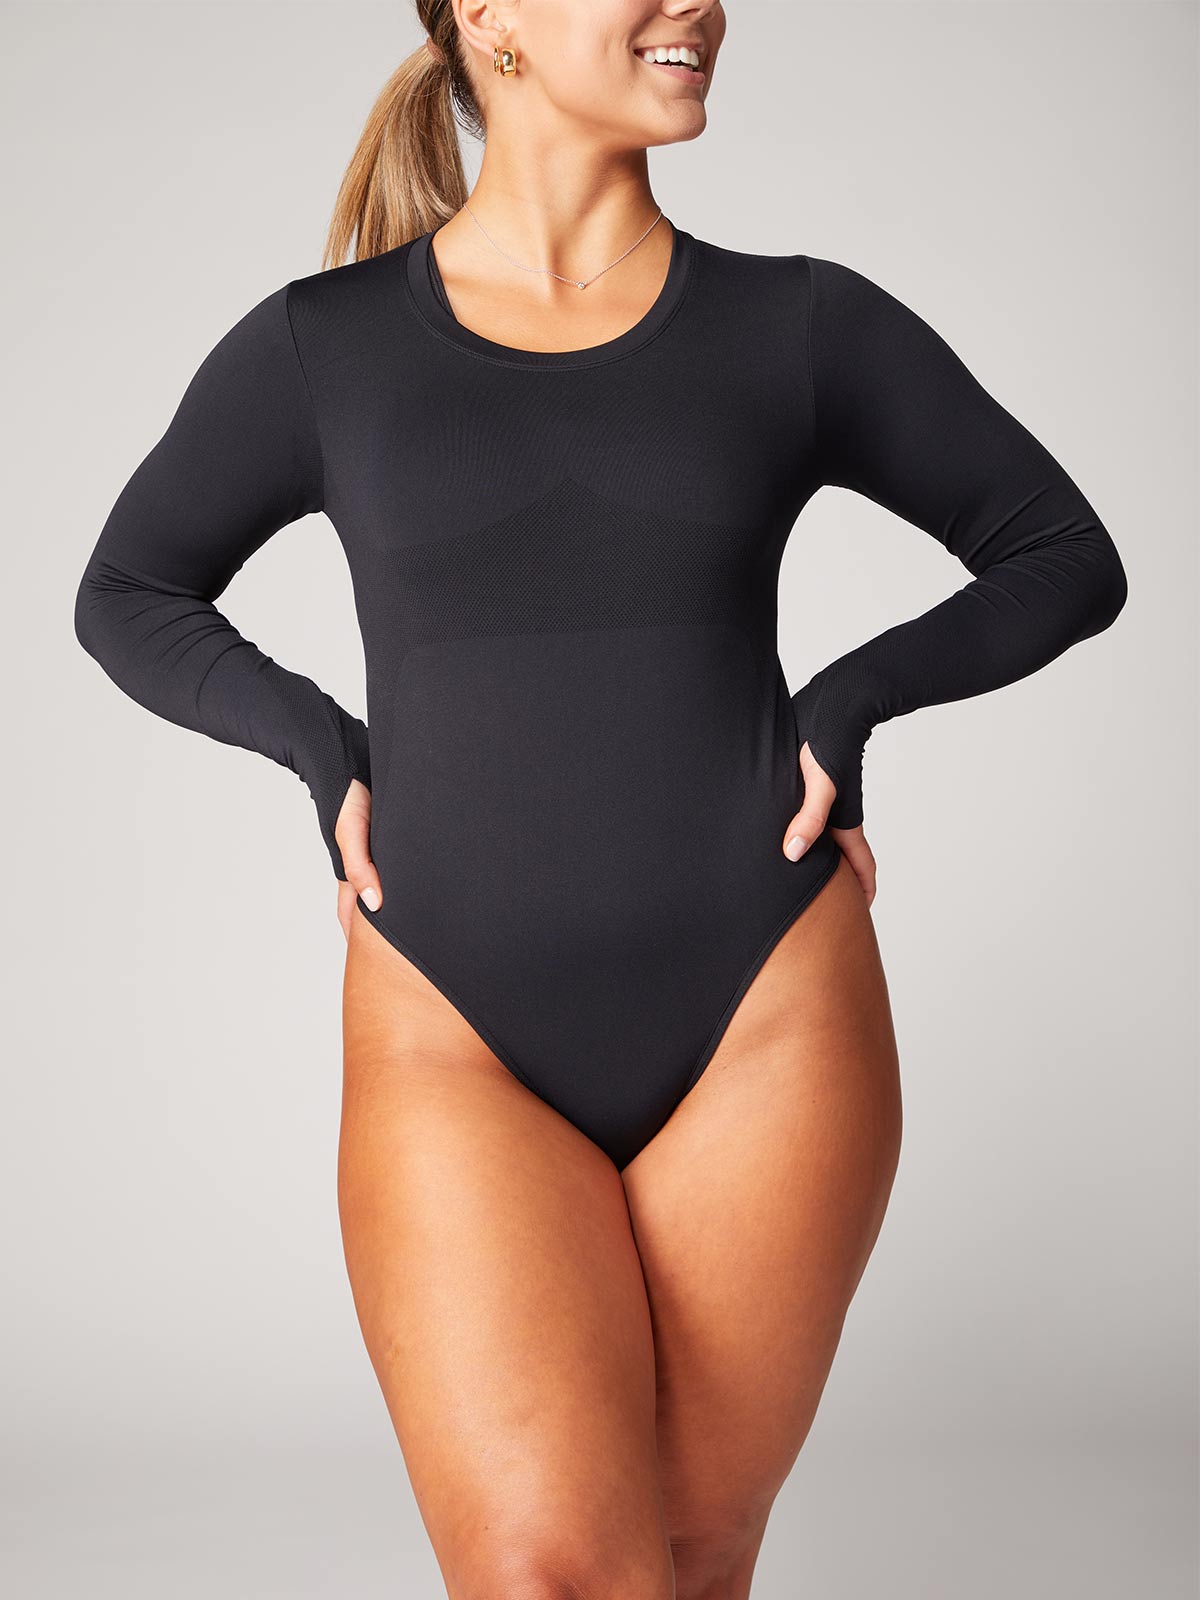 Seamless Bodysuits for Women  Shop Long Sleeve, Tank & Thong